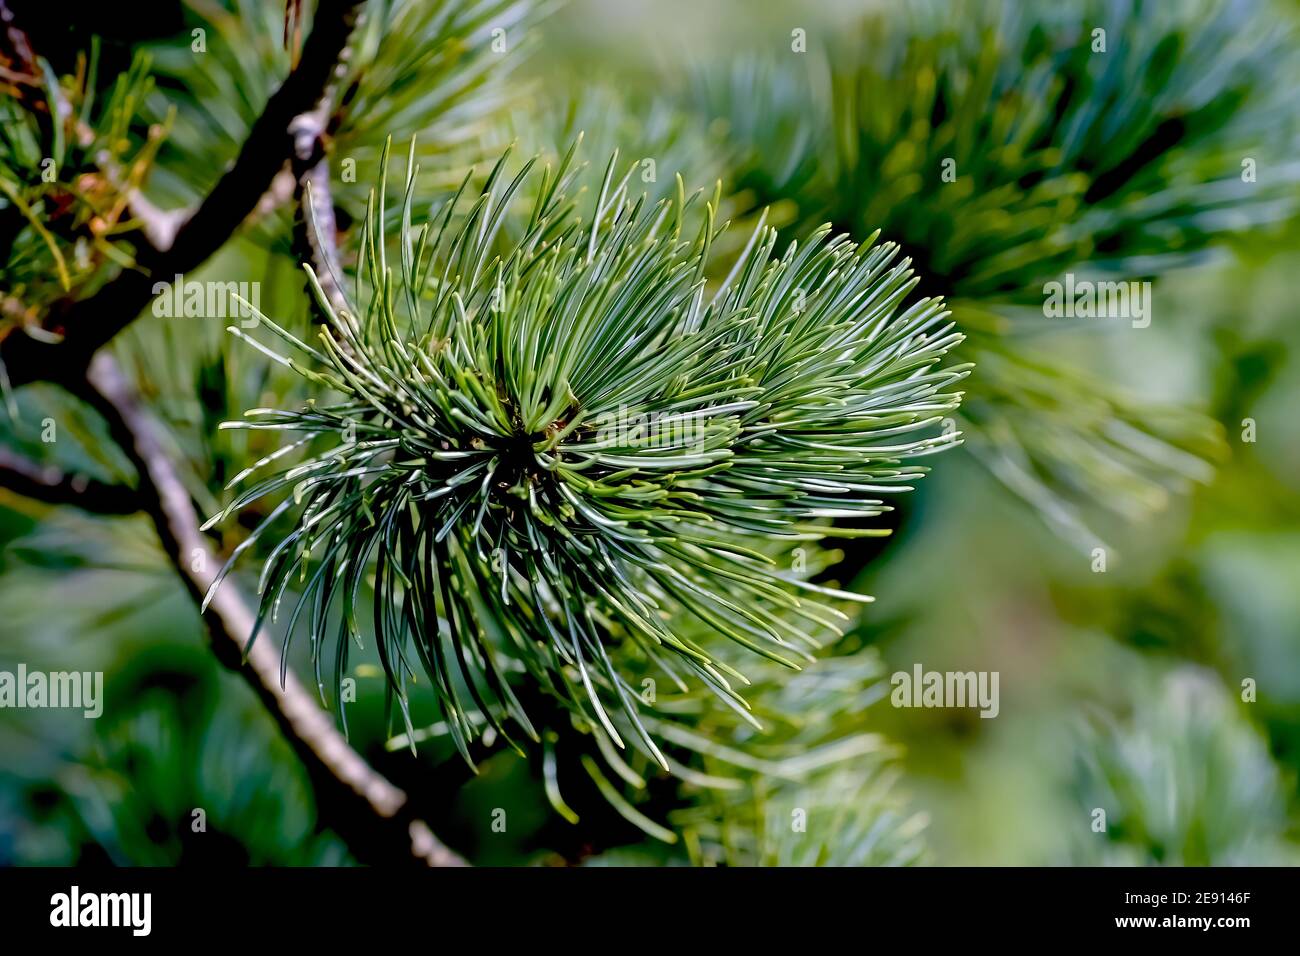 Needles on the branch of a dwarf pine tree, Pinus pumila Stock Photo